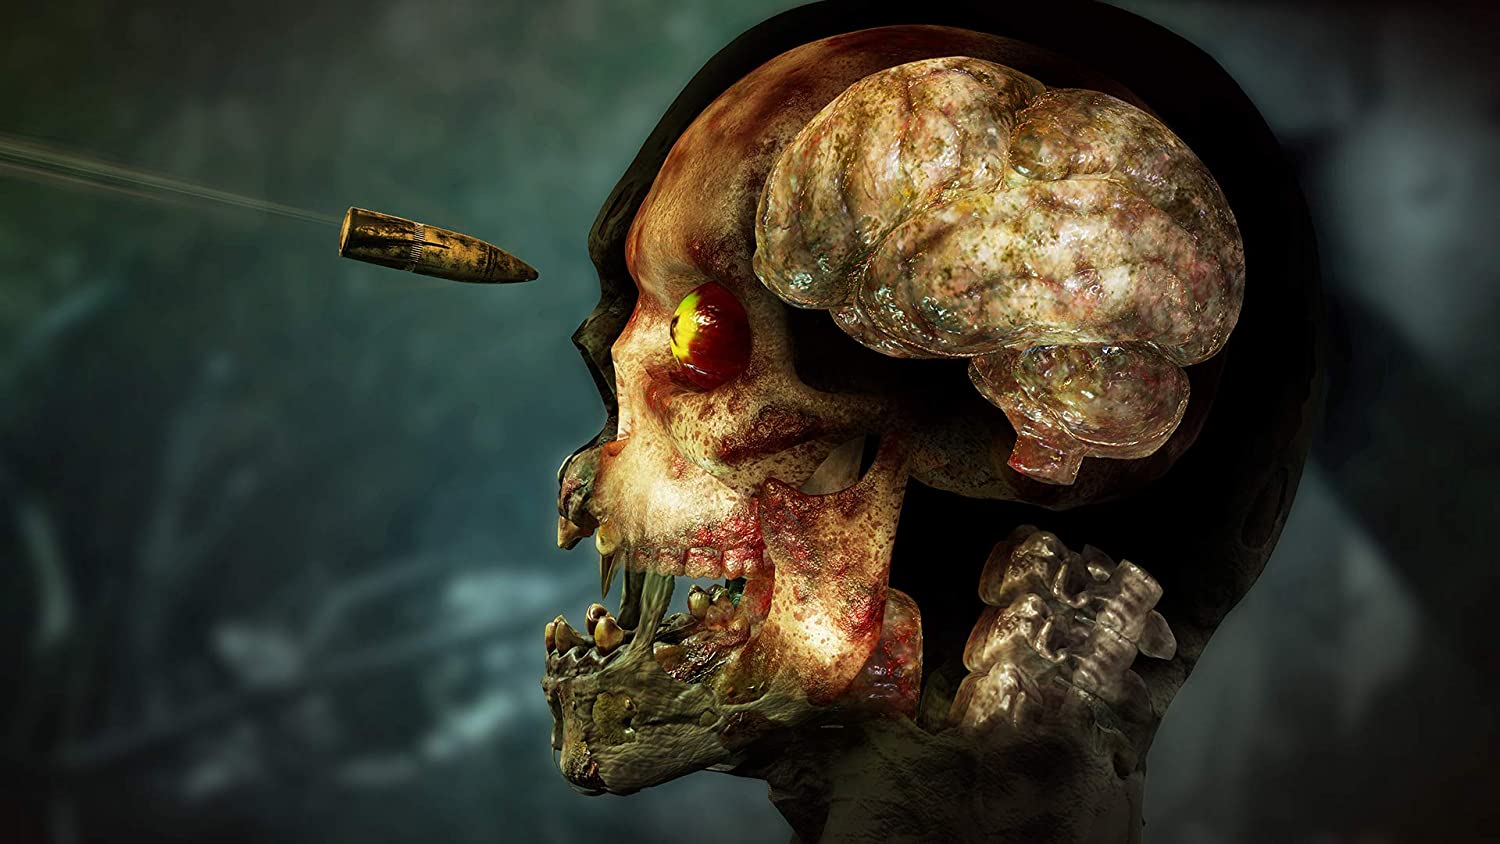 Скриншоты Zombie Army 4 Dead War [Xbox One/Series X, русская версия] интернет-магазин Омегагейм